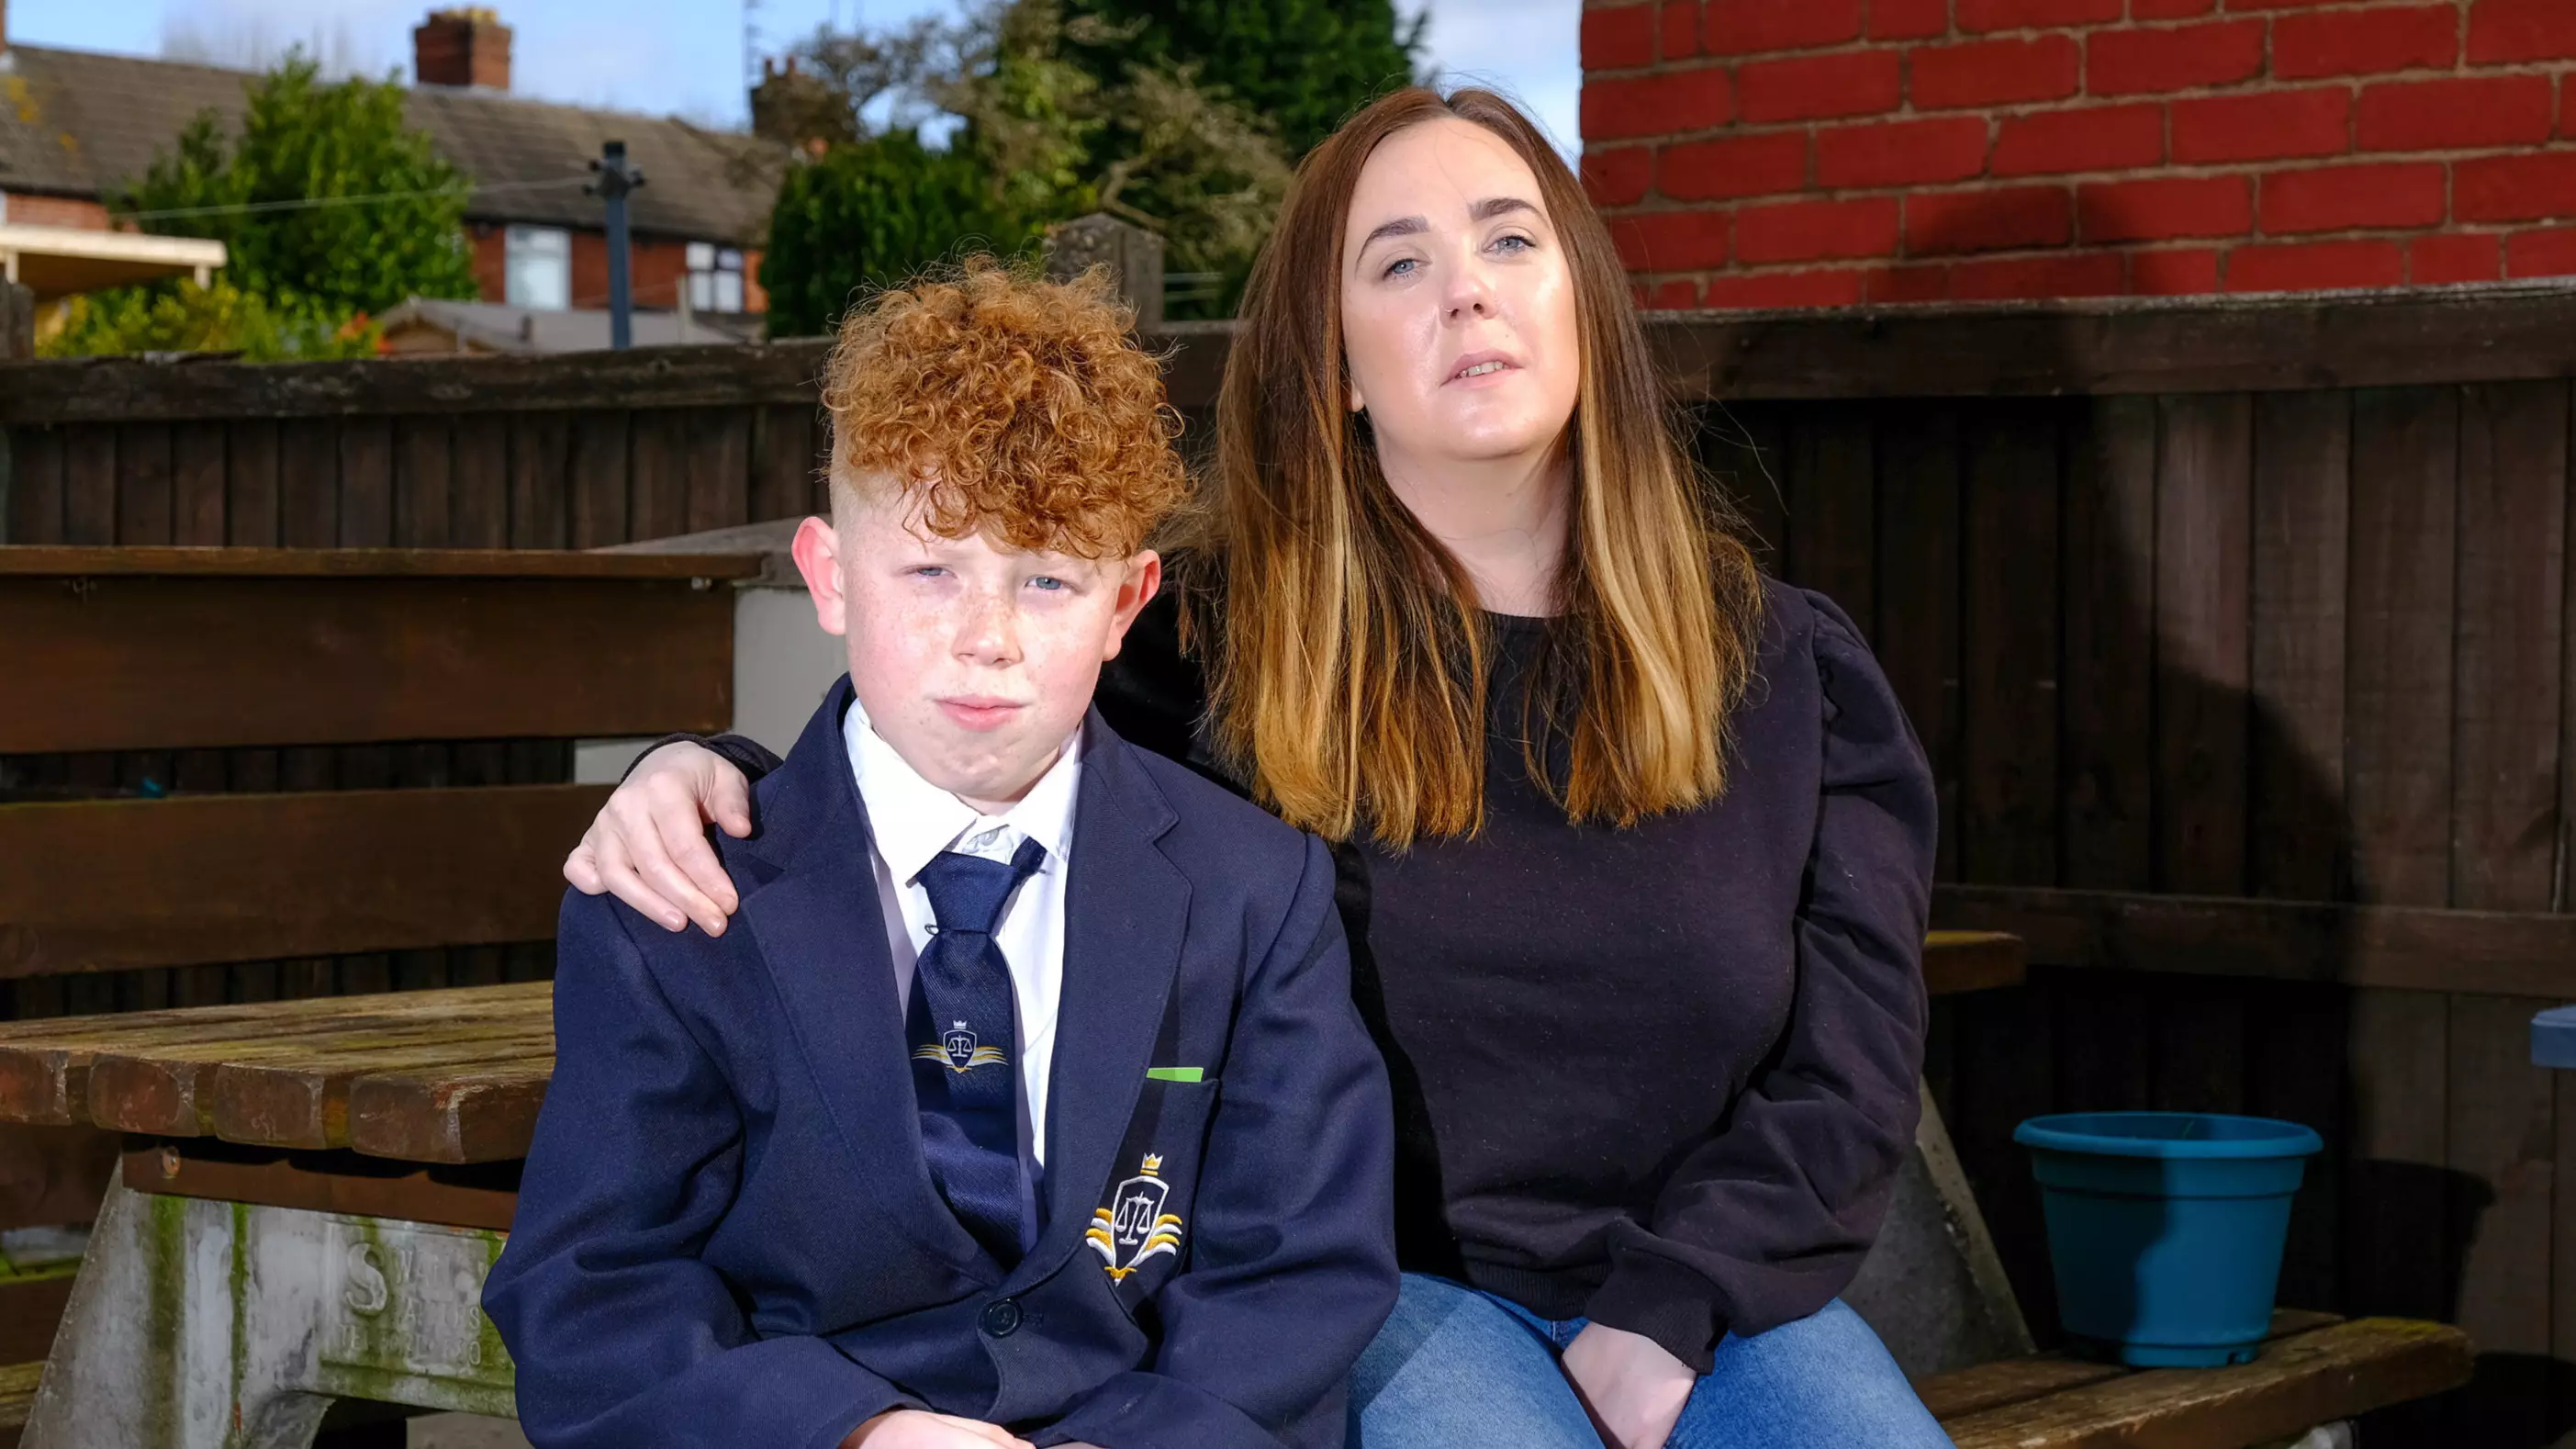 Mum Furious After School Deems Her Son's Lockdown Haircut 'Too Short' 